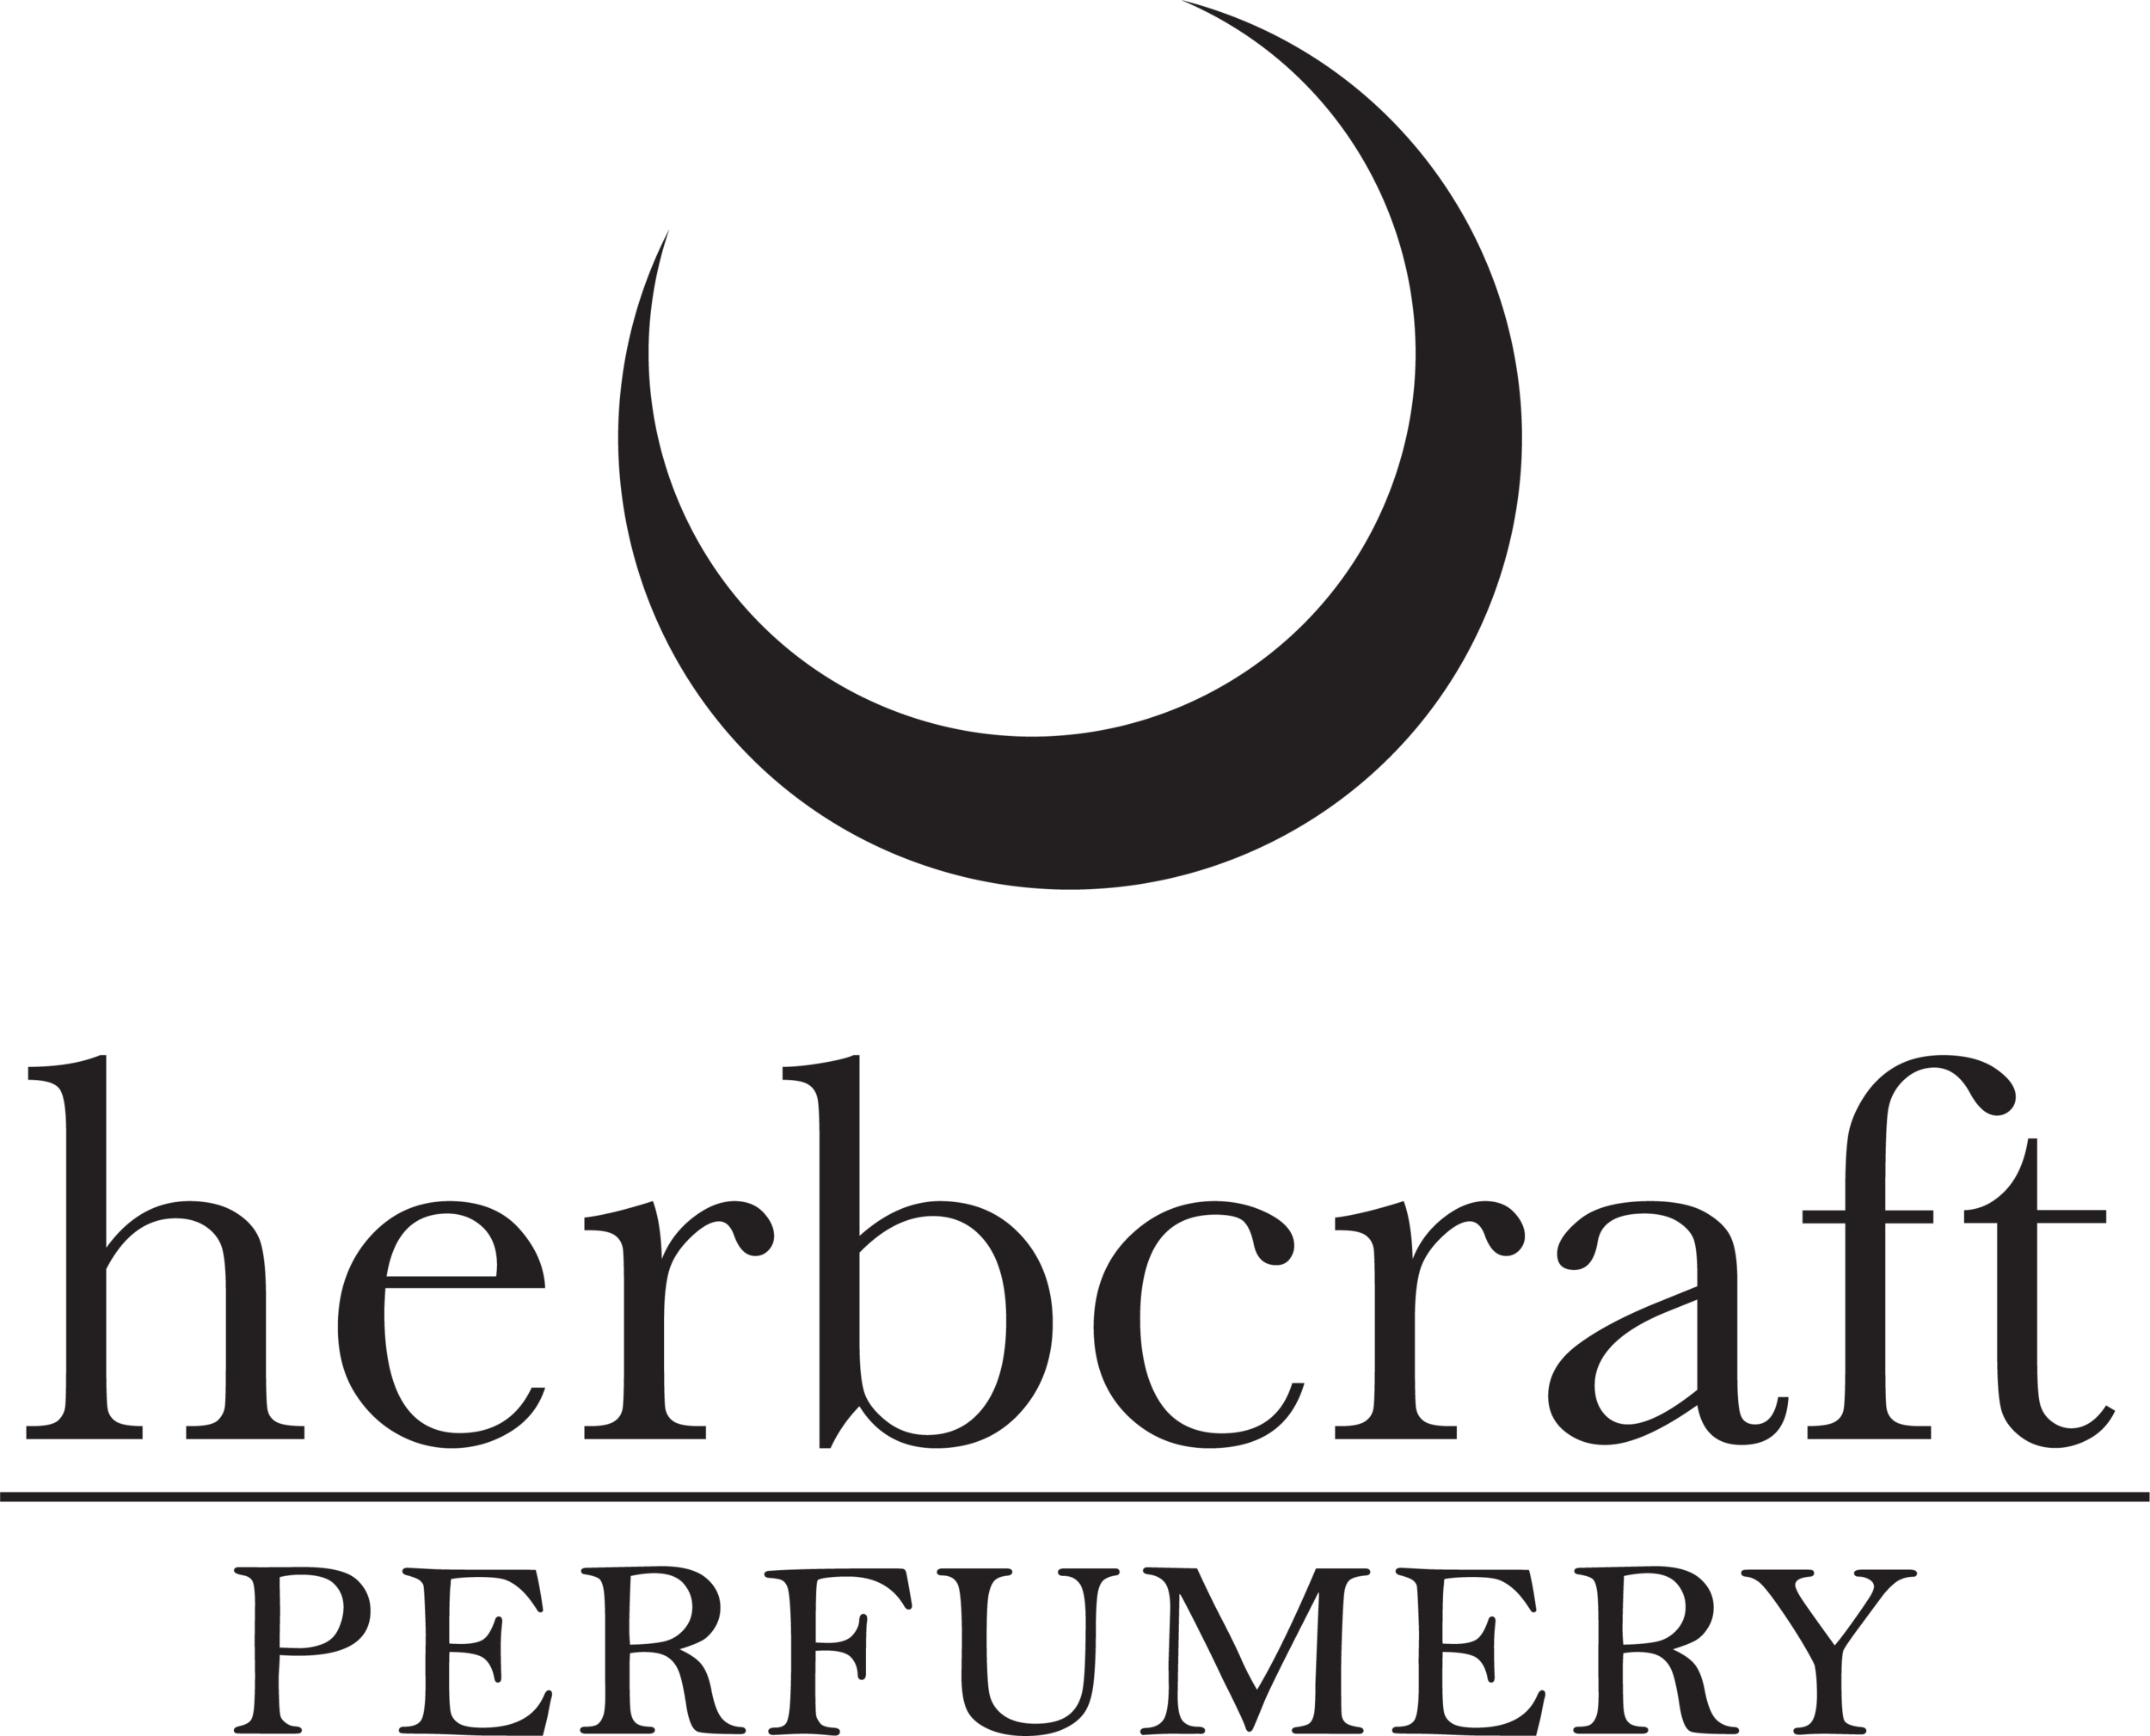 herbcraft perfumery